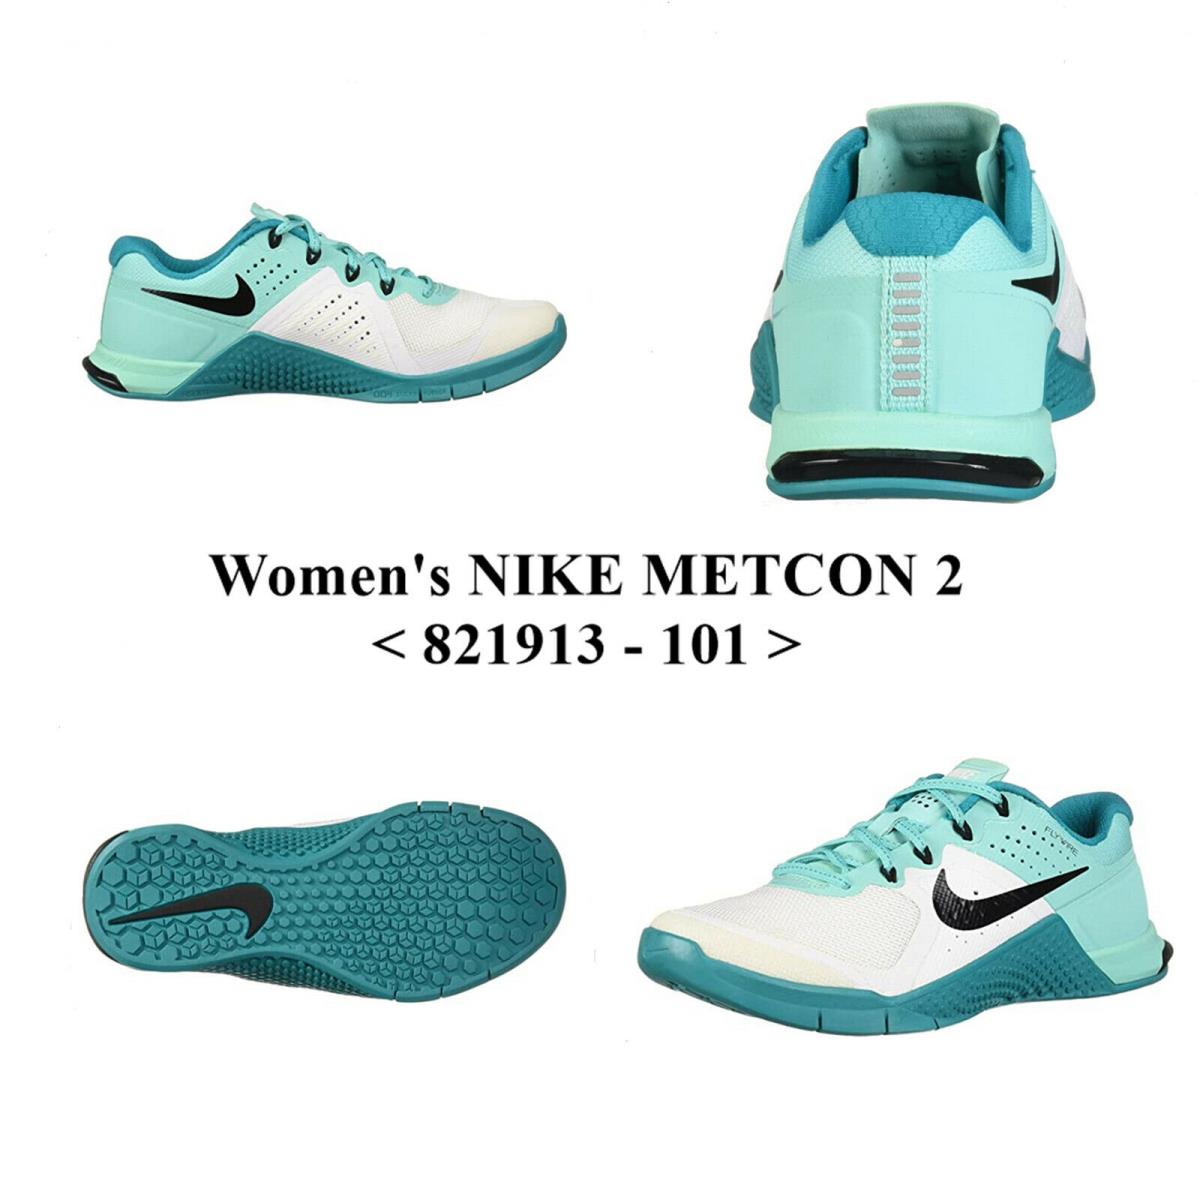 Women`s Nike Metcon 2 <821913 - 101> Training Shoes.new with Box - WHITE / BLACK-HYPER TURQ-ENERGY